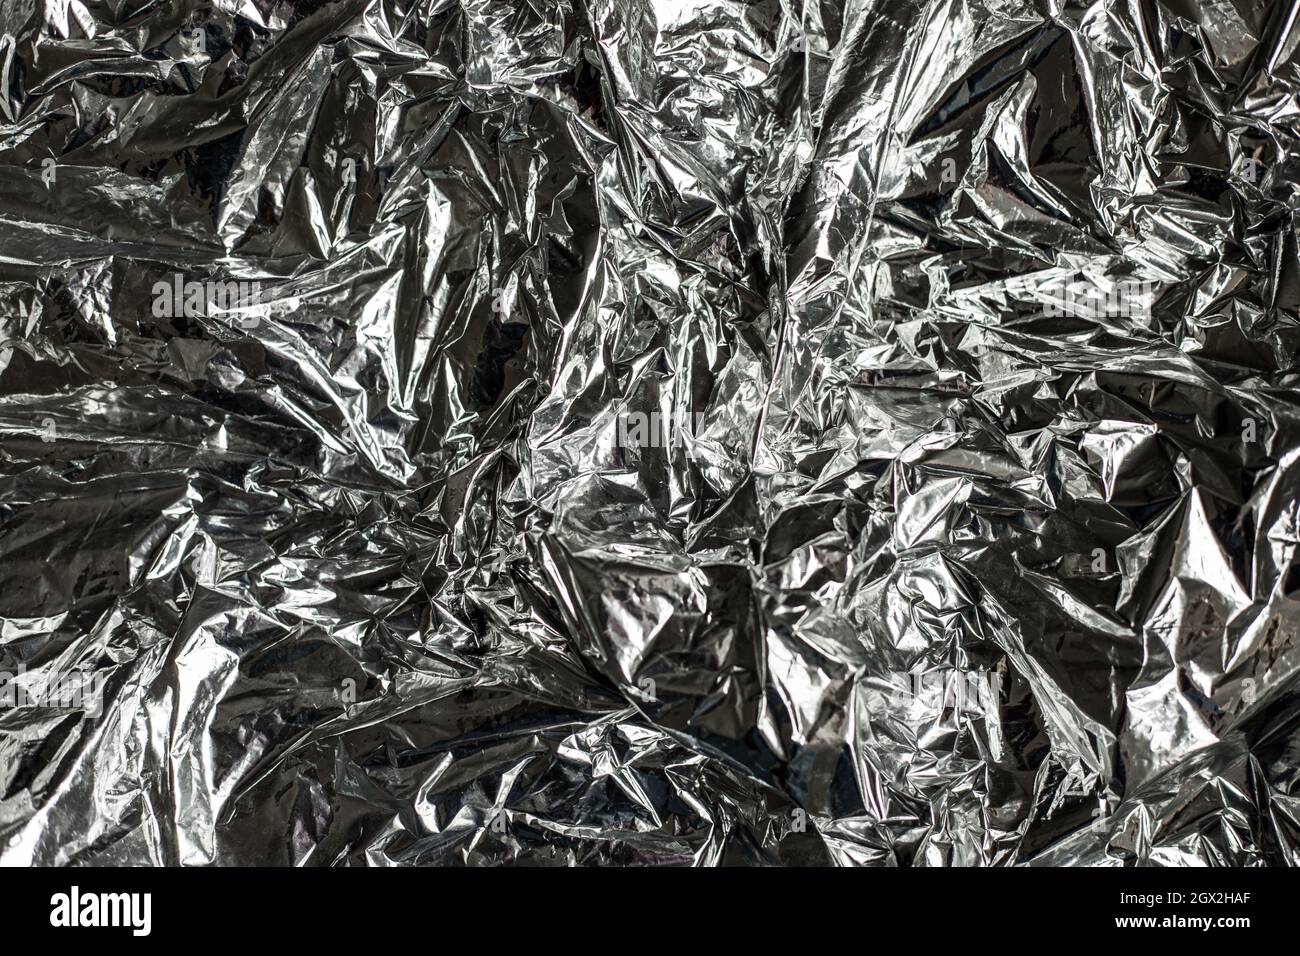 https://c8.alamy.com/comp/2GX2HAF/close-up-of-aluminium-foil-crumpled-silver-foil-texture-background-abstract-metallic-paper-pattern-2GX2HAF.jpg